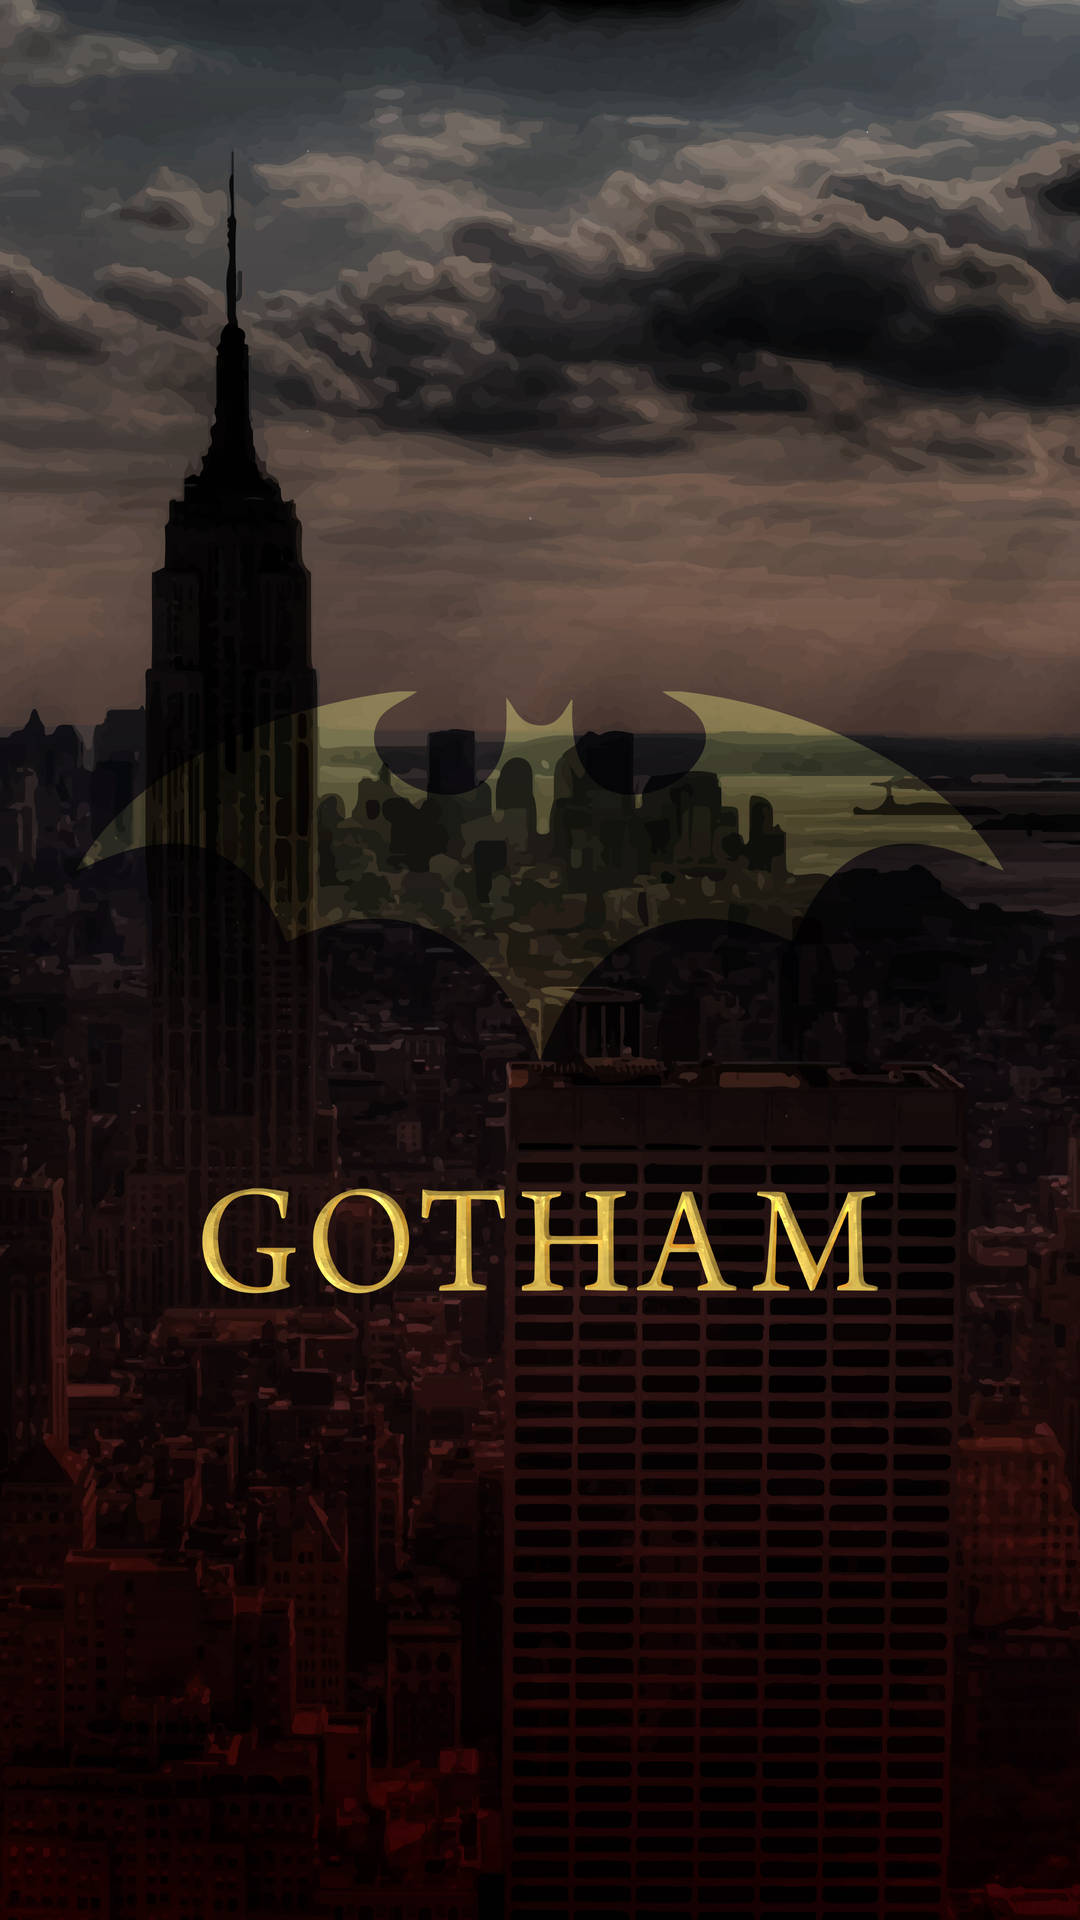 Gotham 2160 X 3840 Wallpaper